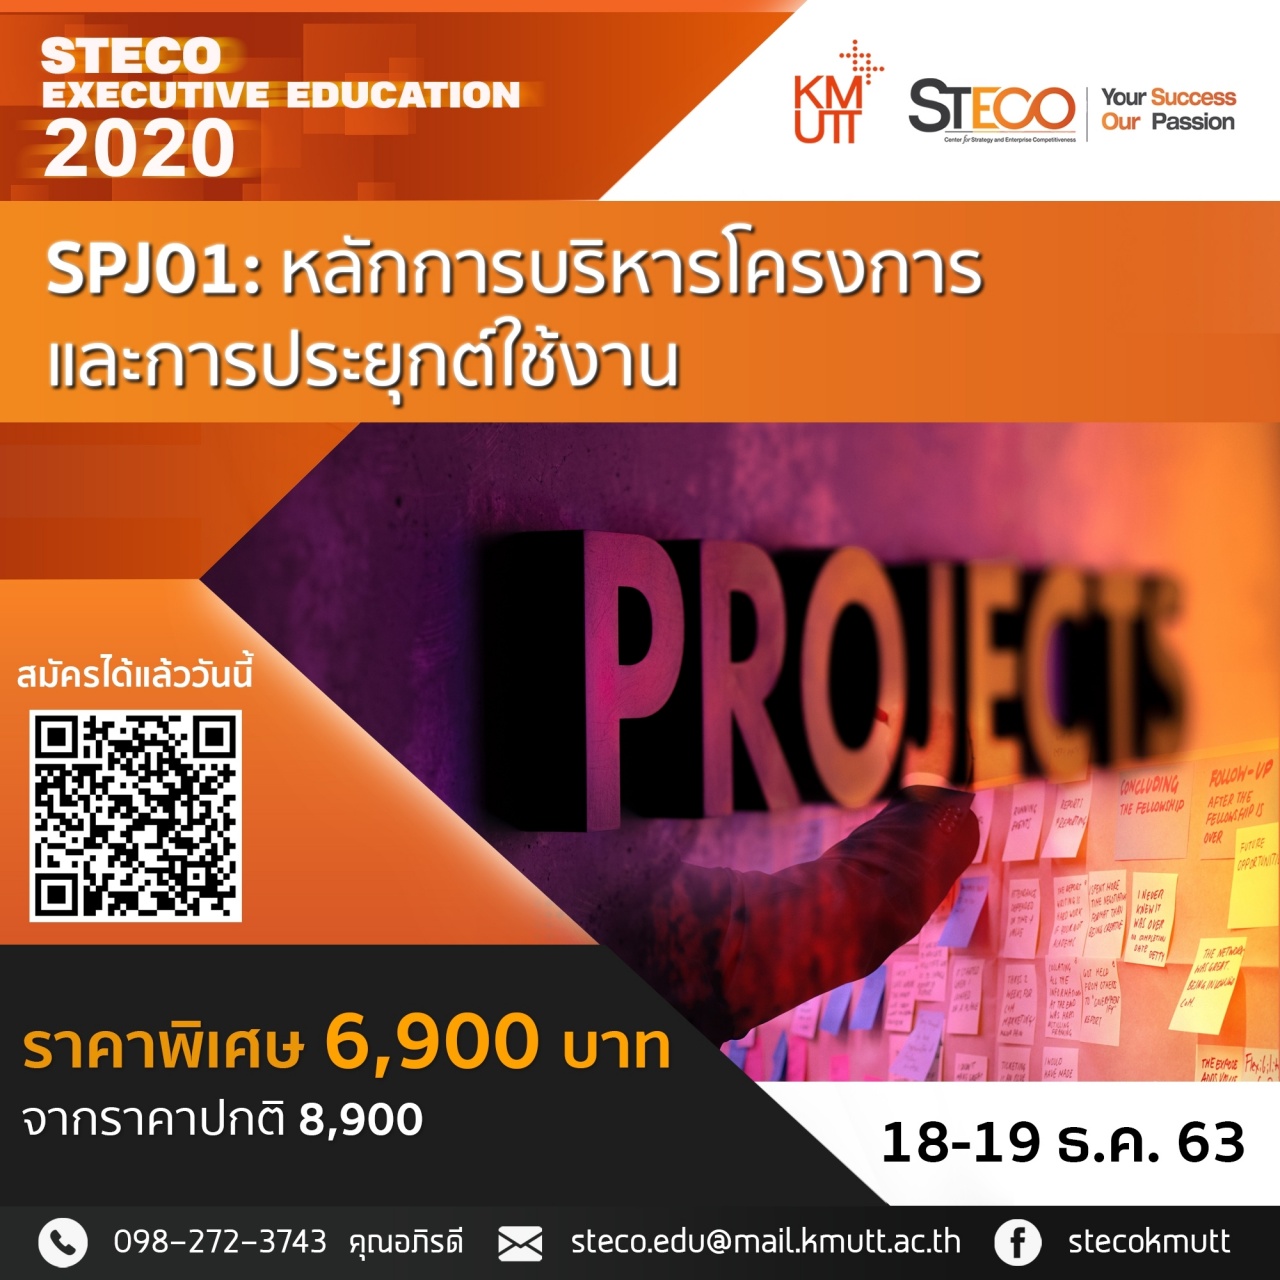 SPJ01: Project Management Methodology and Practice (หลักการบริหารโครงการและการประยุกต์ใช้งาน)